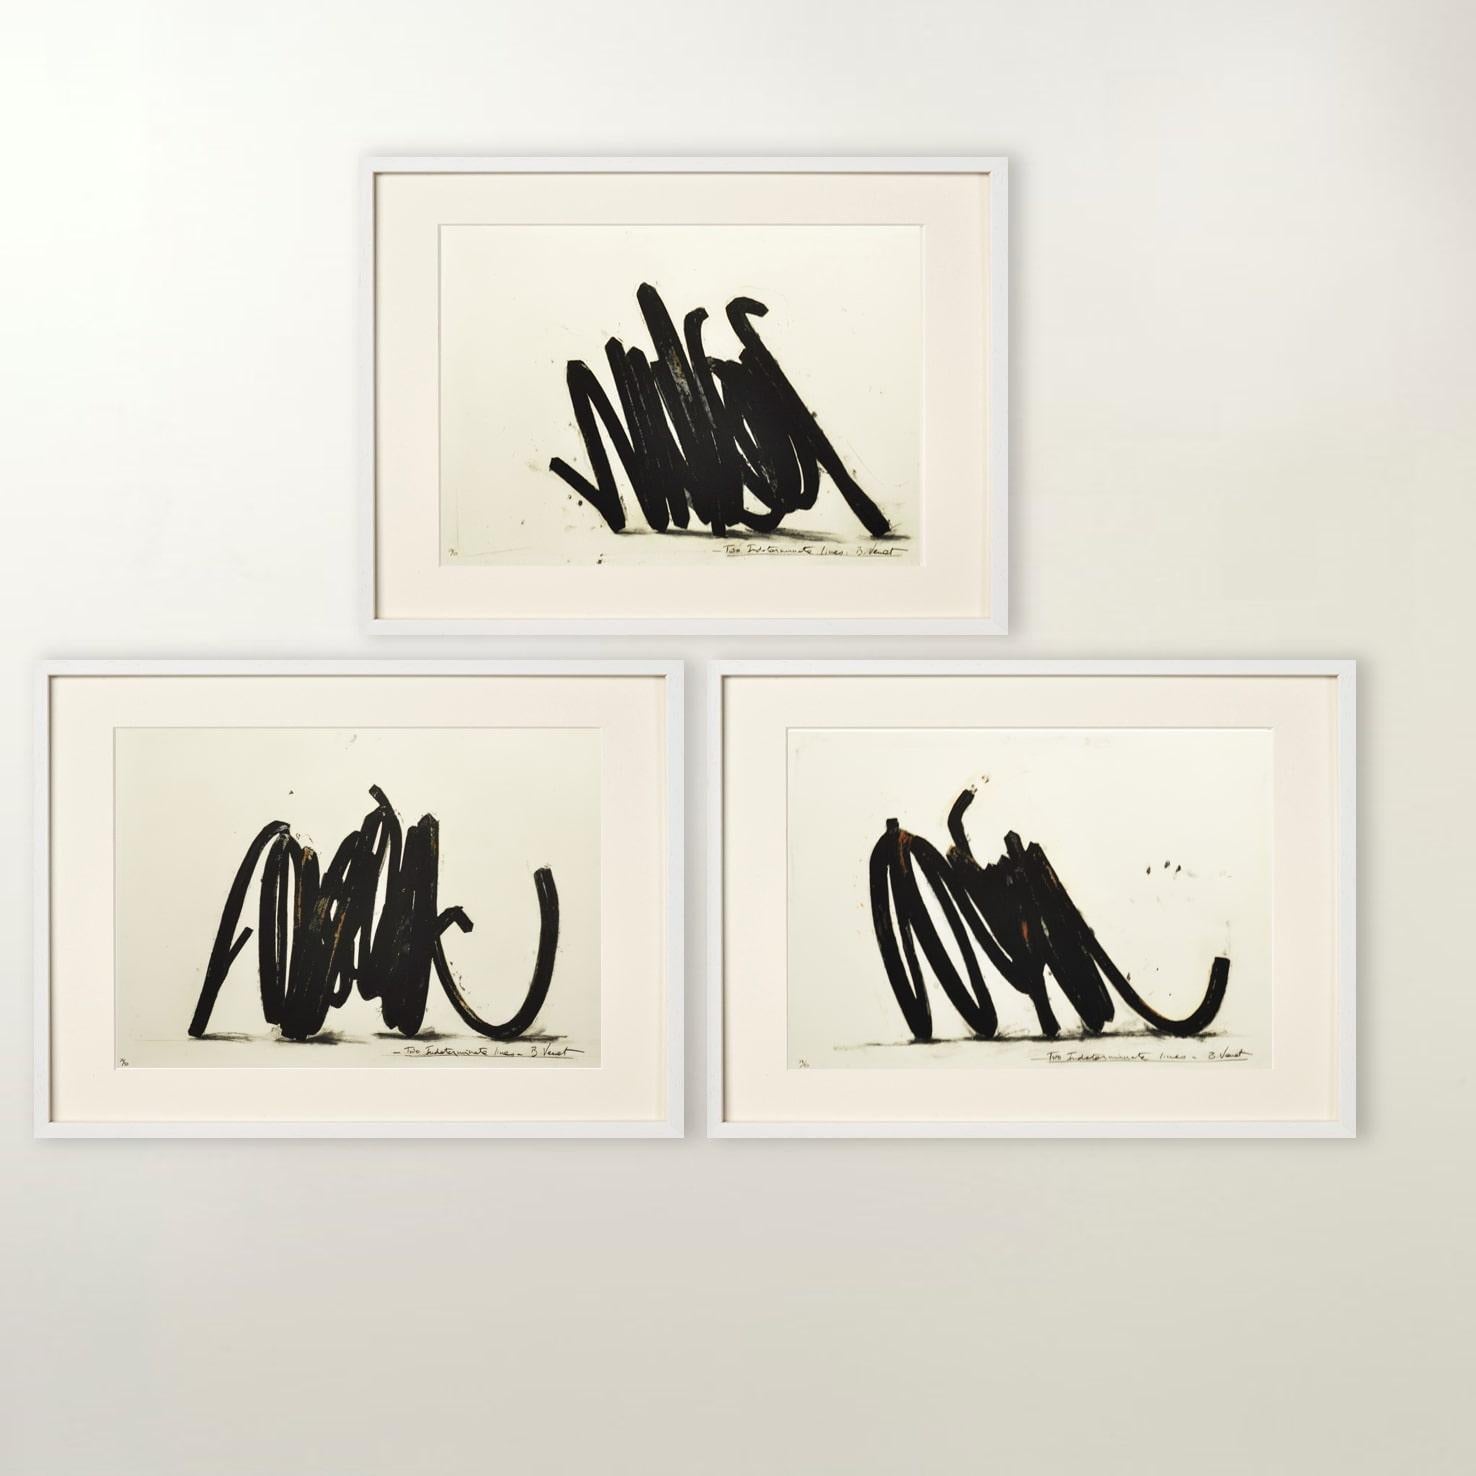 Bernar Venet Figurative Print - Two Indeterminate Lines - Contemporary, 21st Century, Etching, Black, Edition